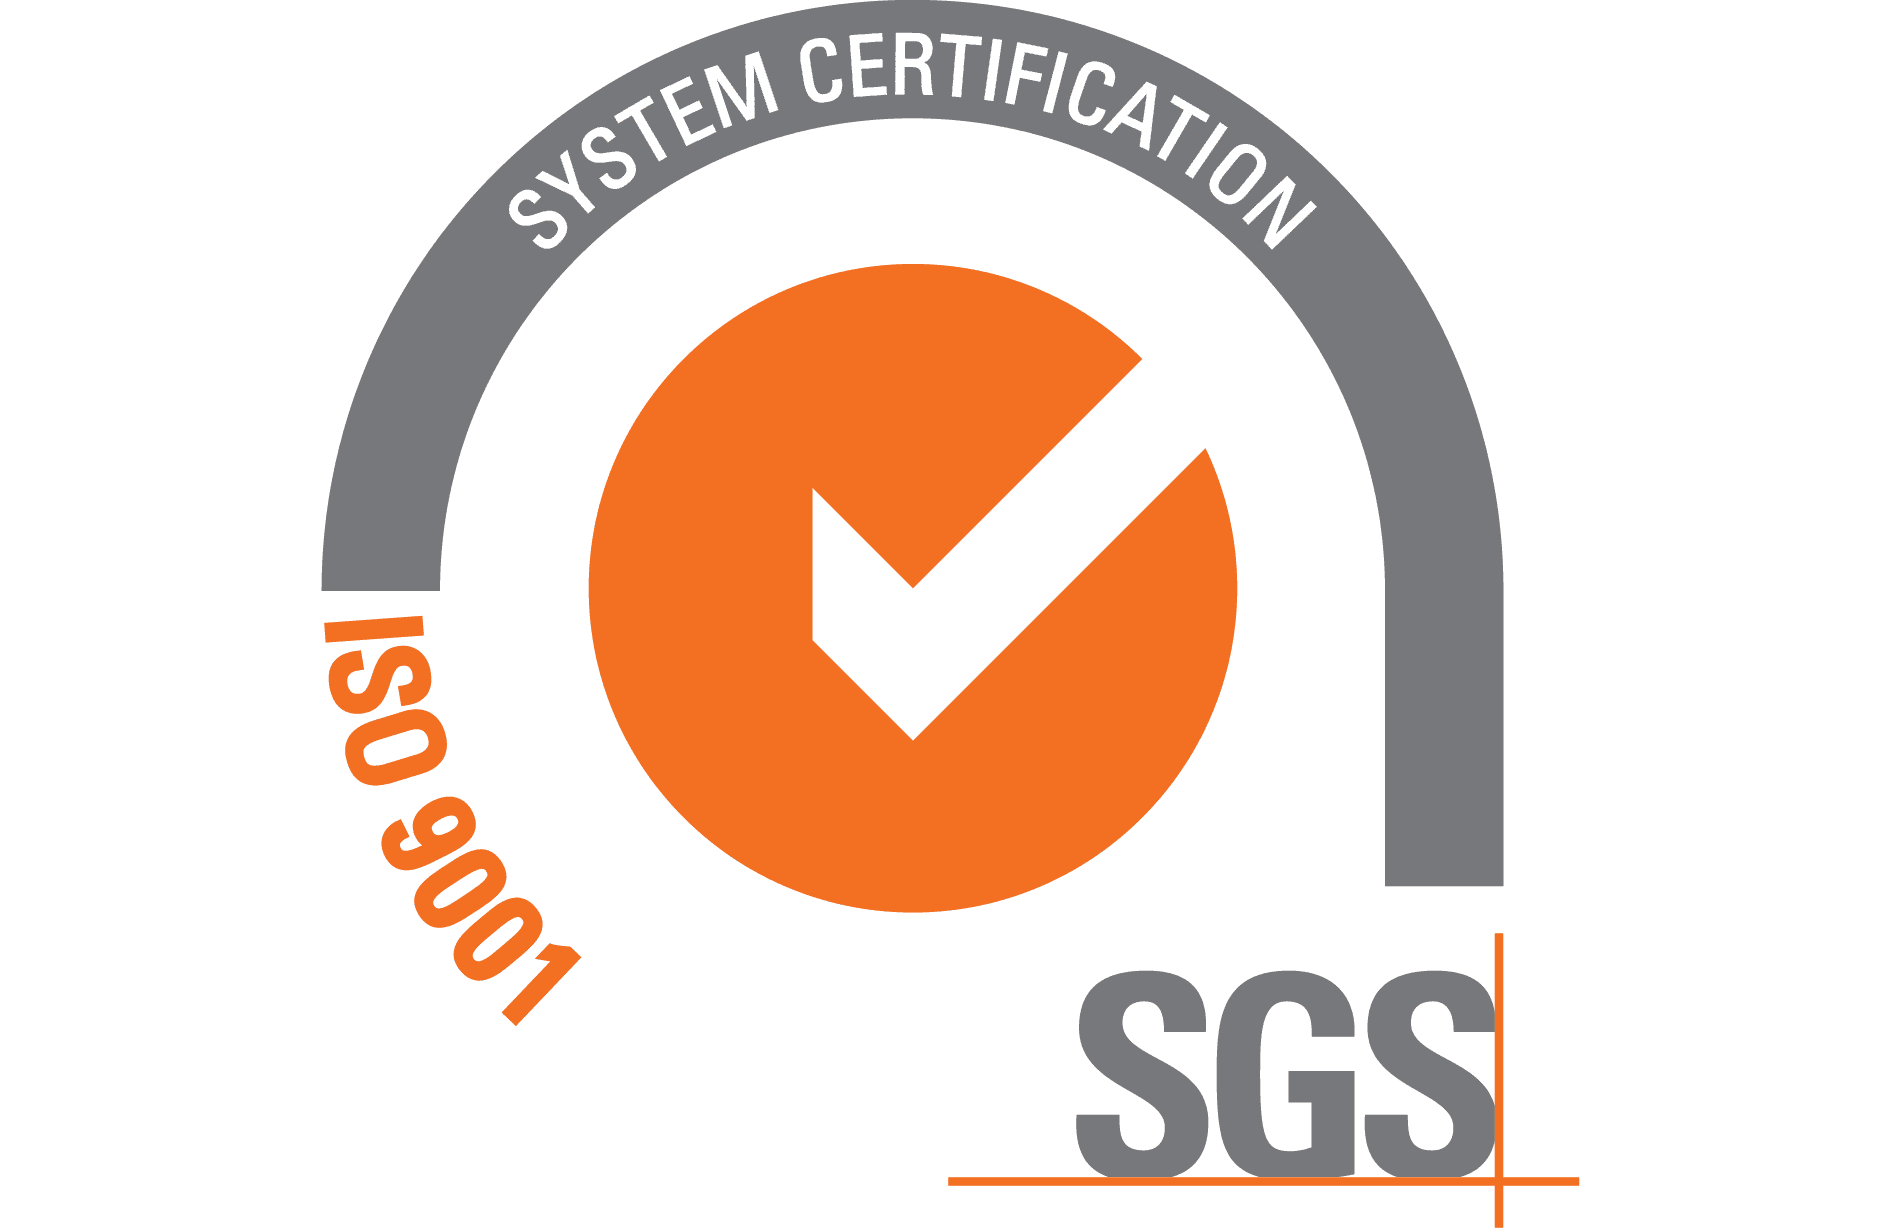 SGS ISO 9001 System certification logo